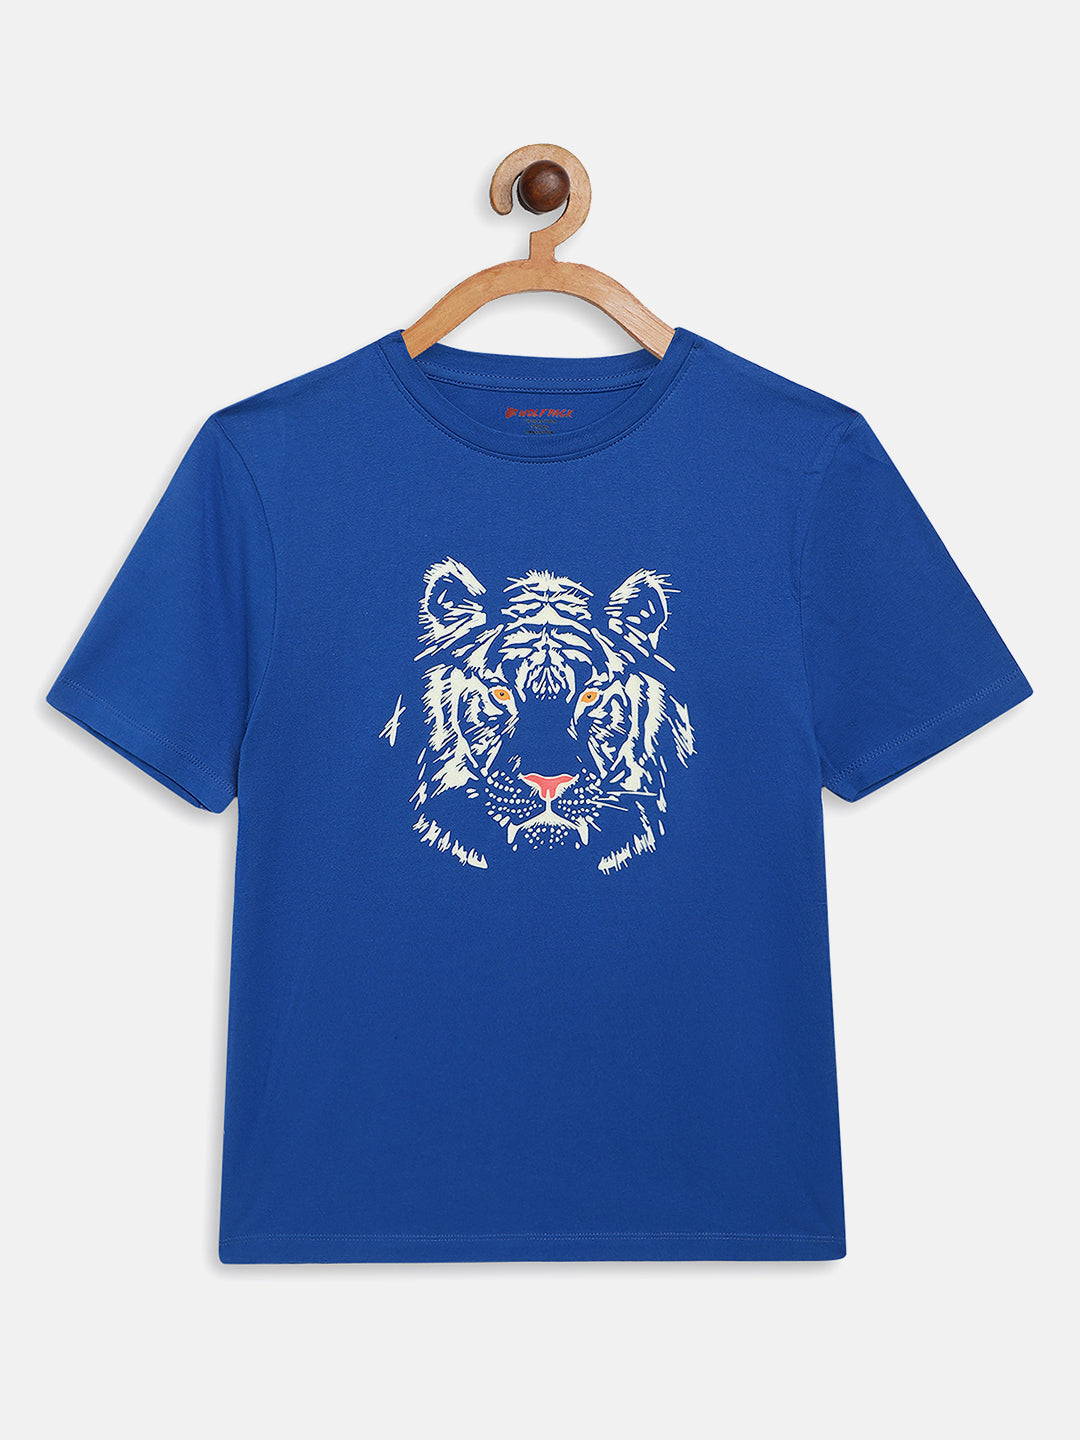 Wolfpack Boys Royal Blue Printed T-Shirt